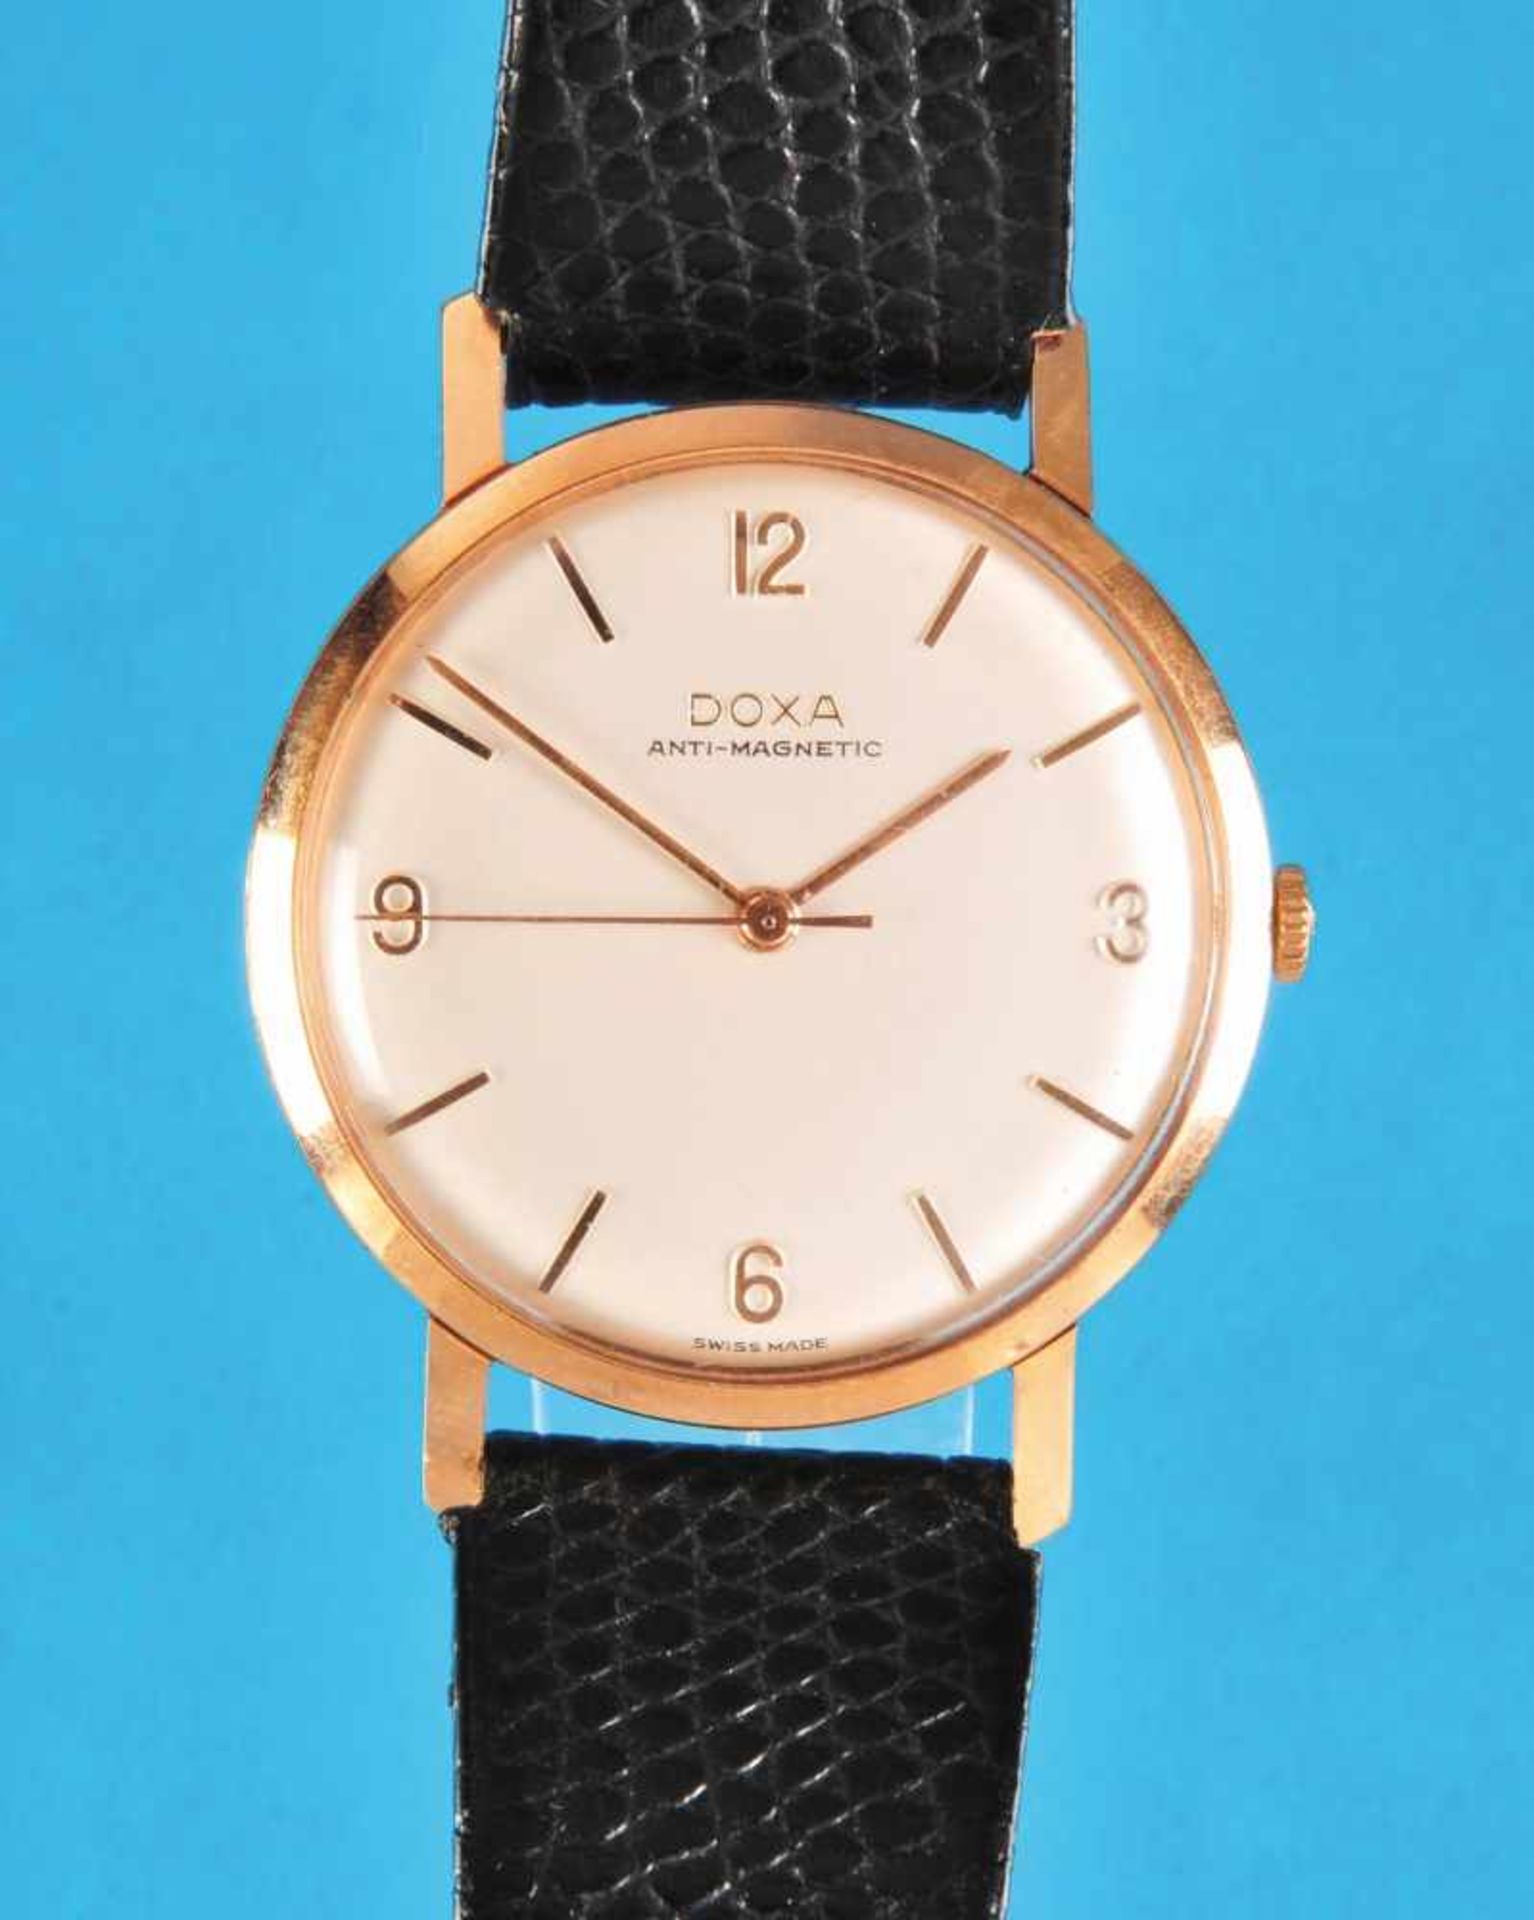 Gold wristwatch, Doxa